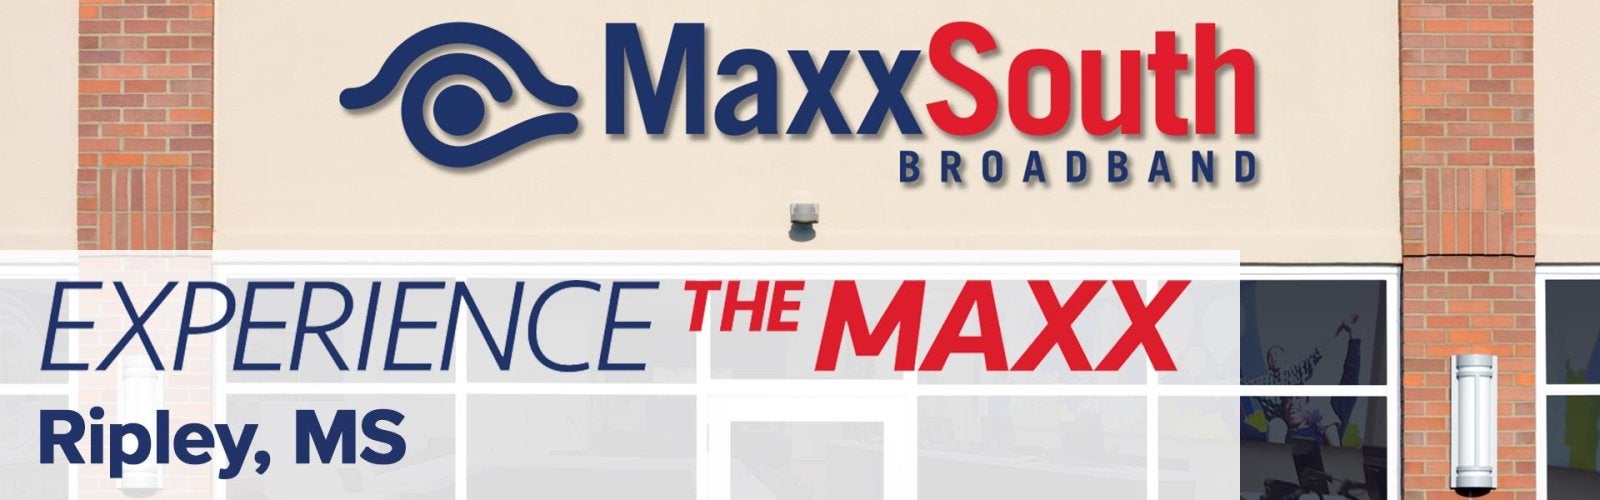 maxxsouth store near me, maxxsouth ripley store, ripley, maxxsouth support